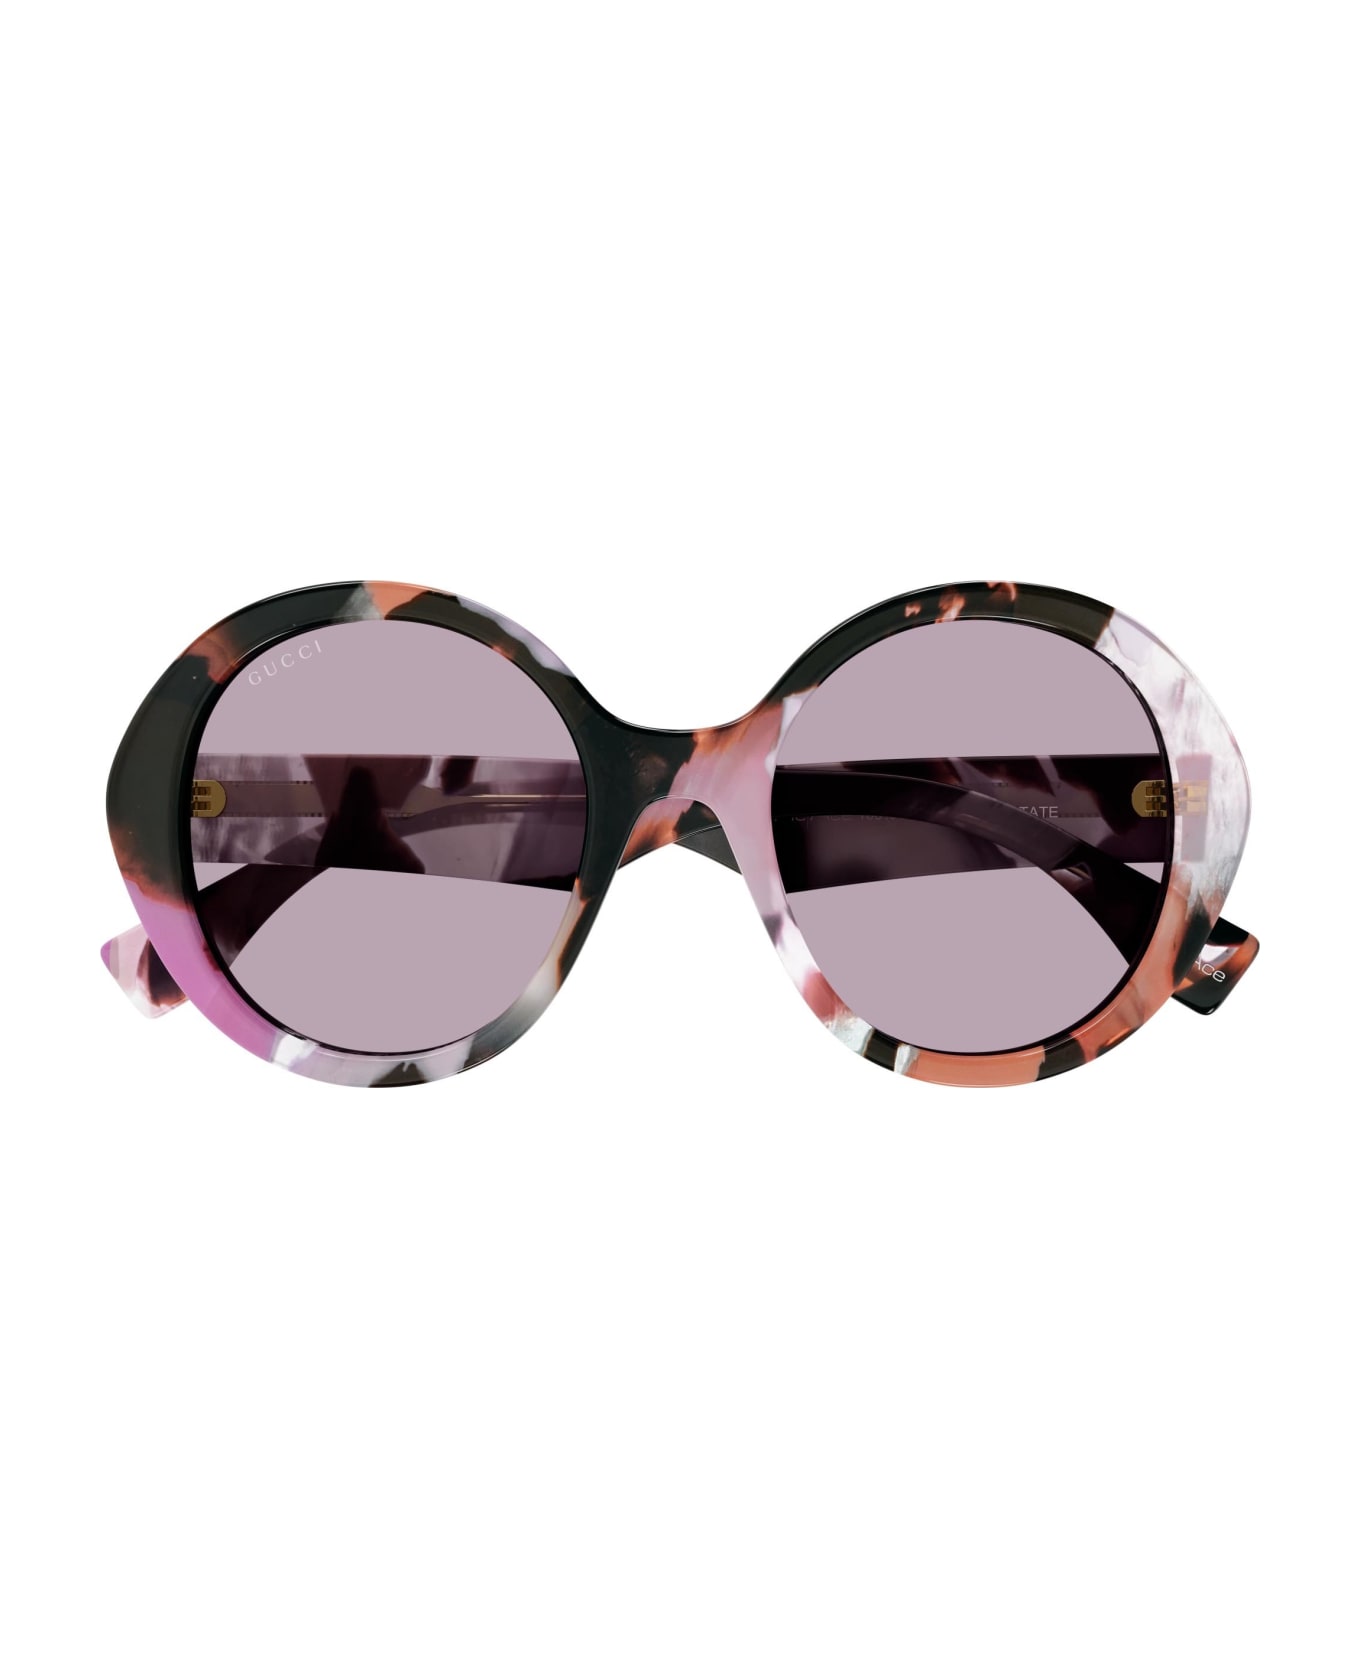 Gucci Eyewear Sunglasses - Rosa/Viola chiaro